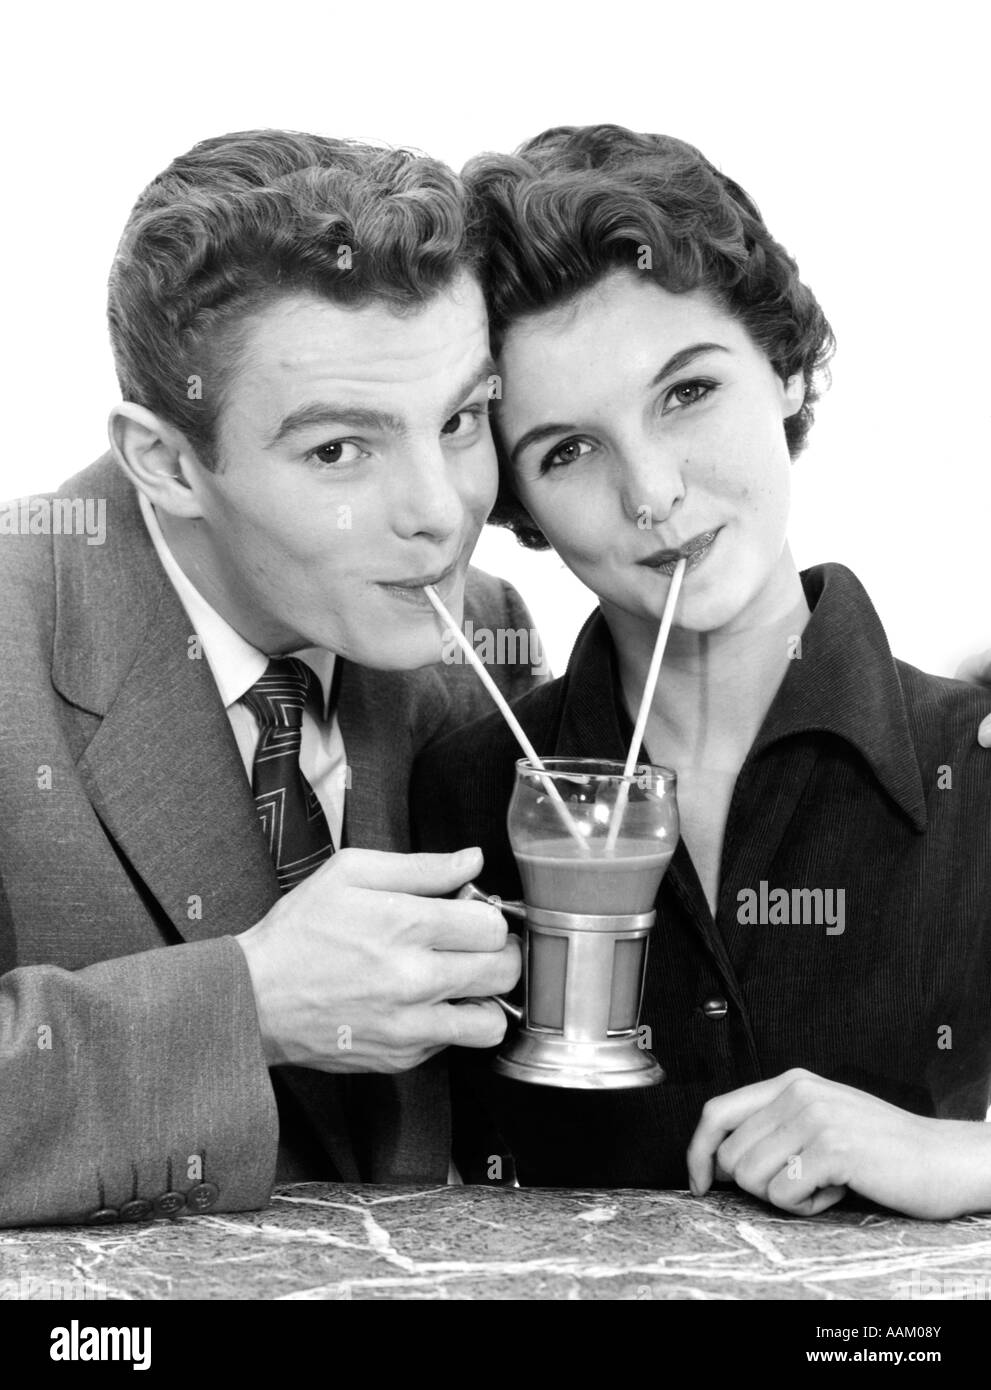 Milkshake with straws Black and White Stock Photos & Images - Alamy